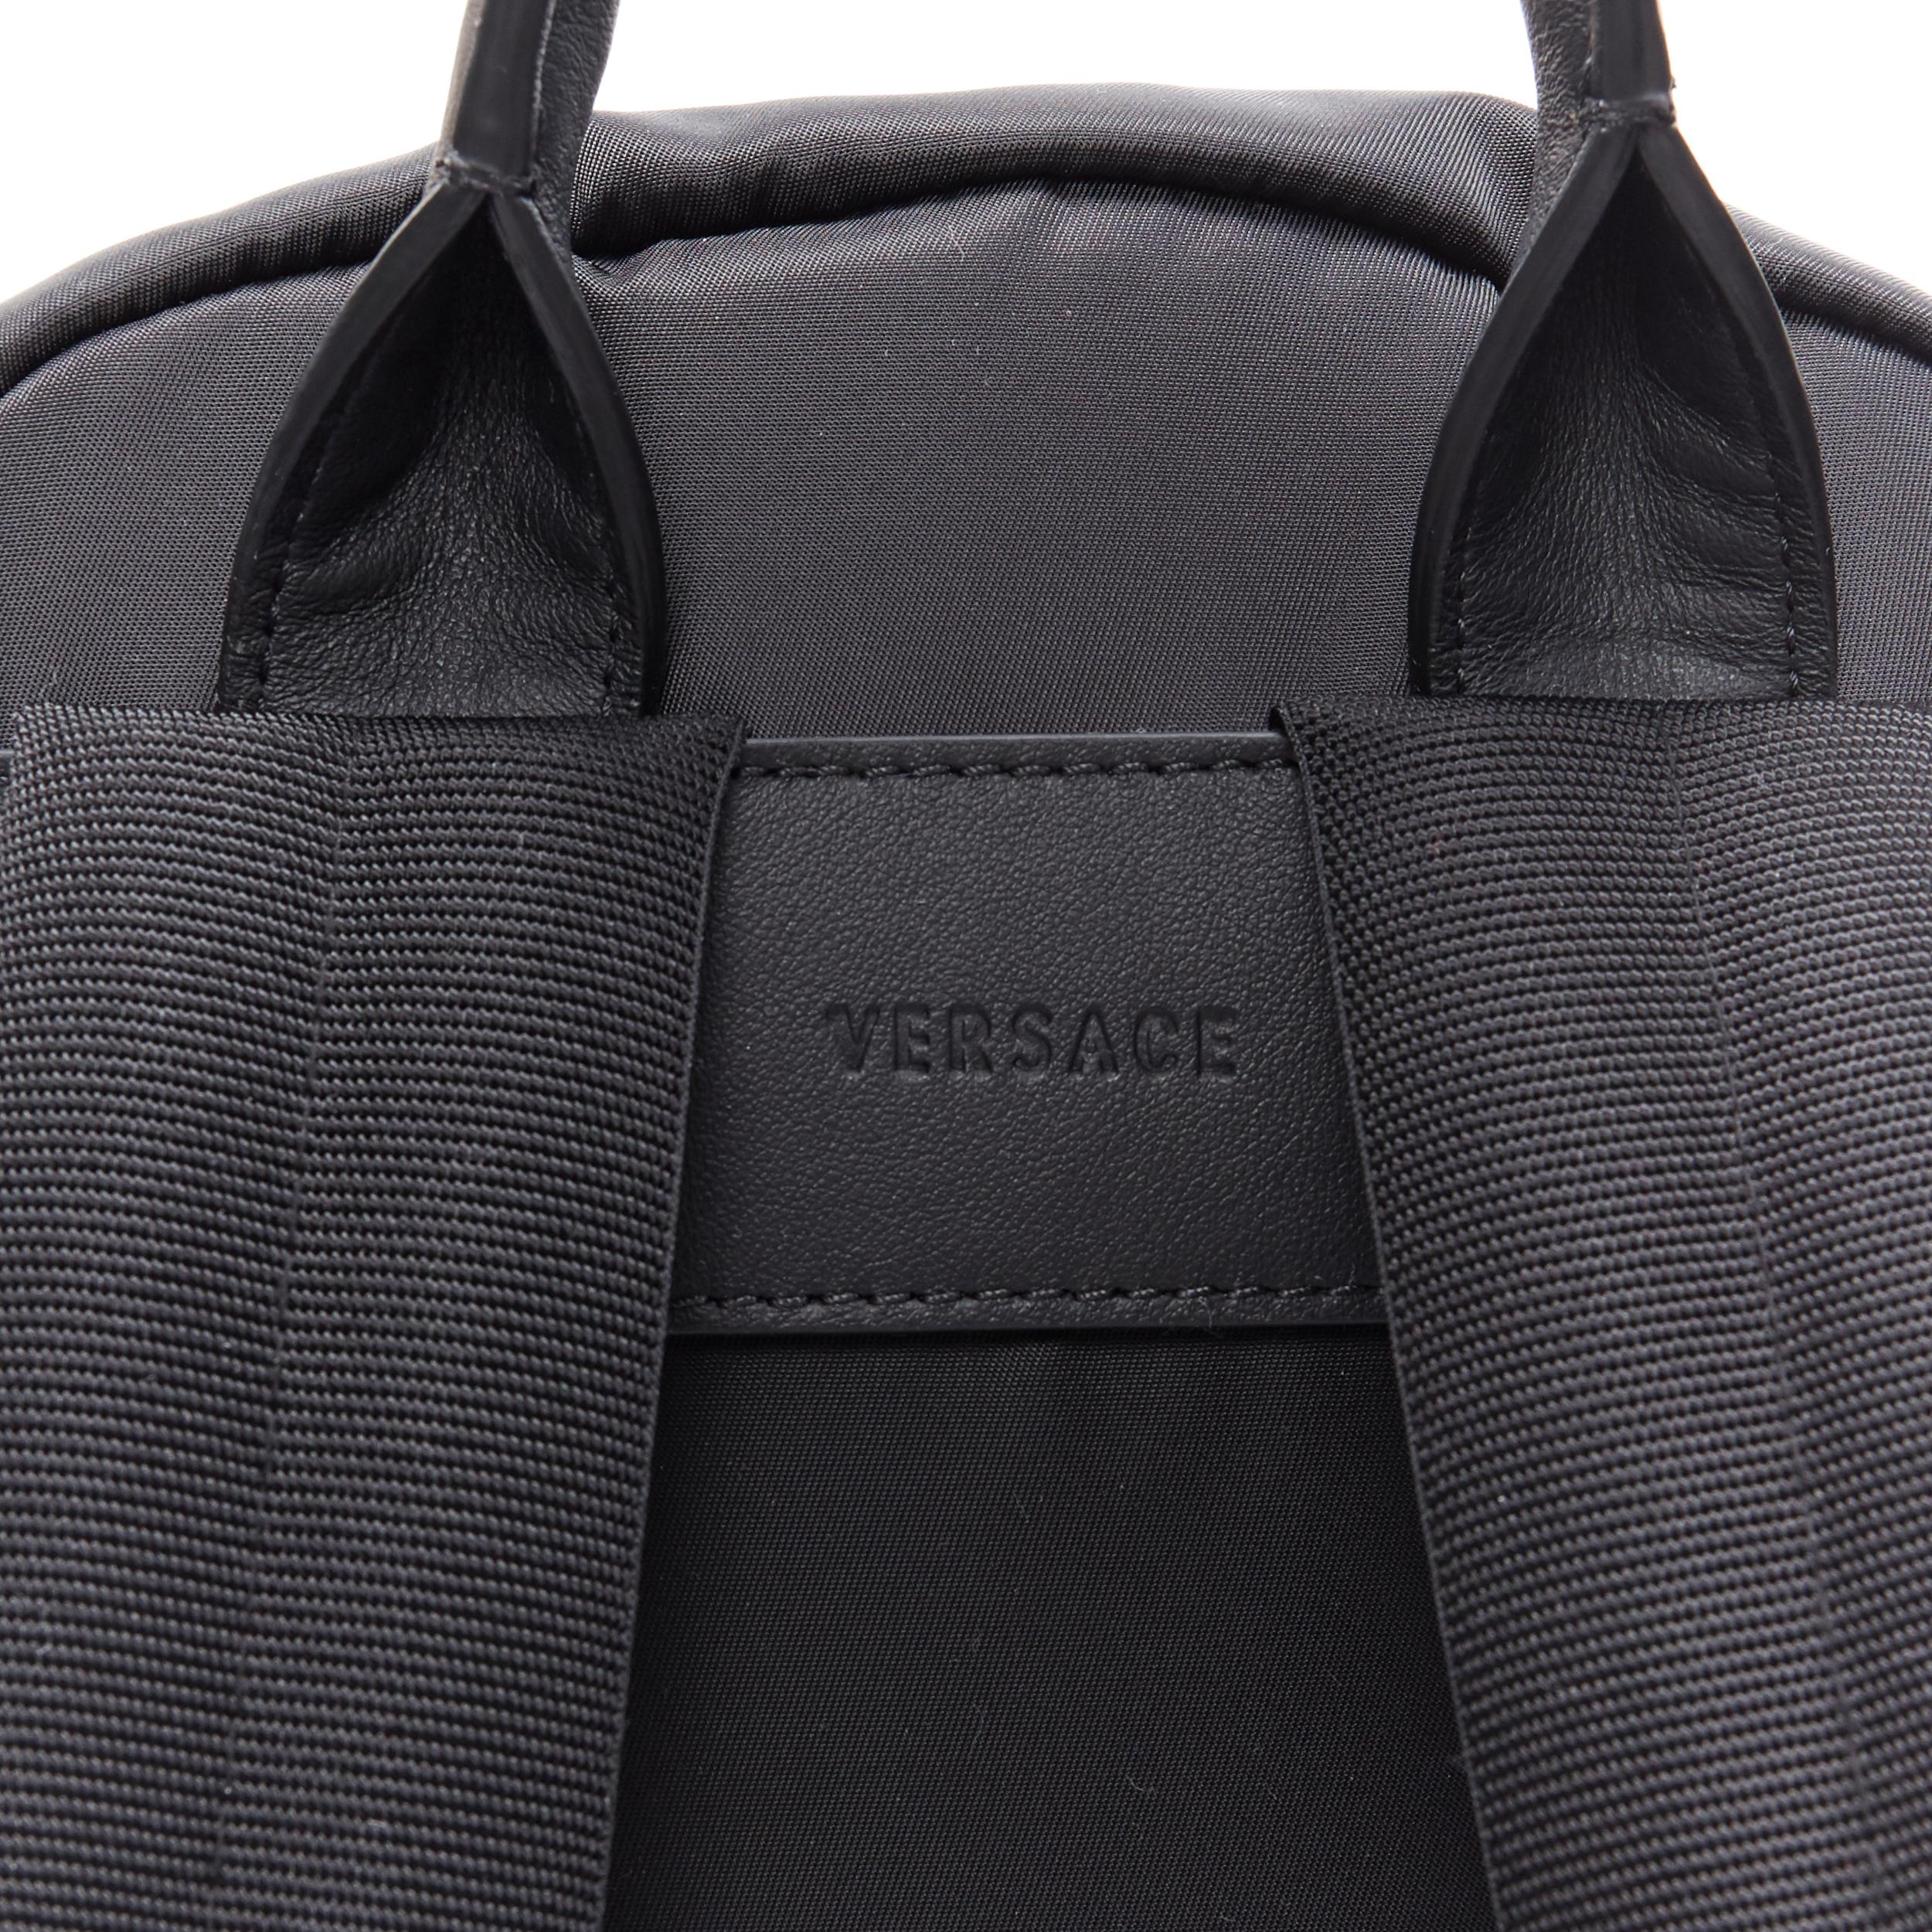 new VERSACE Palazzo Medusa black nylon Greca stitch front pocket backpack 2